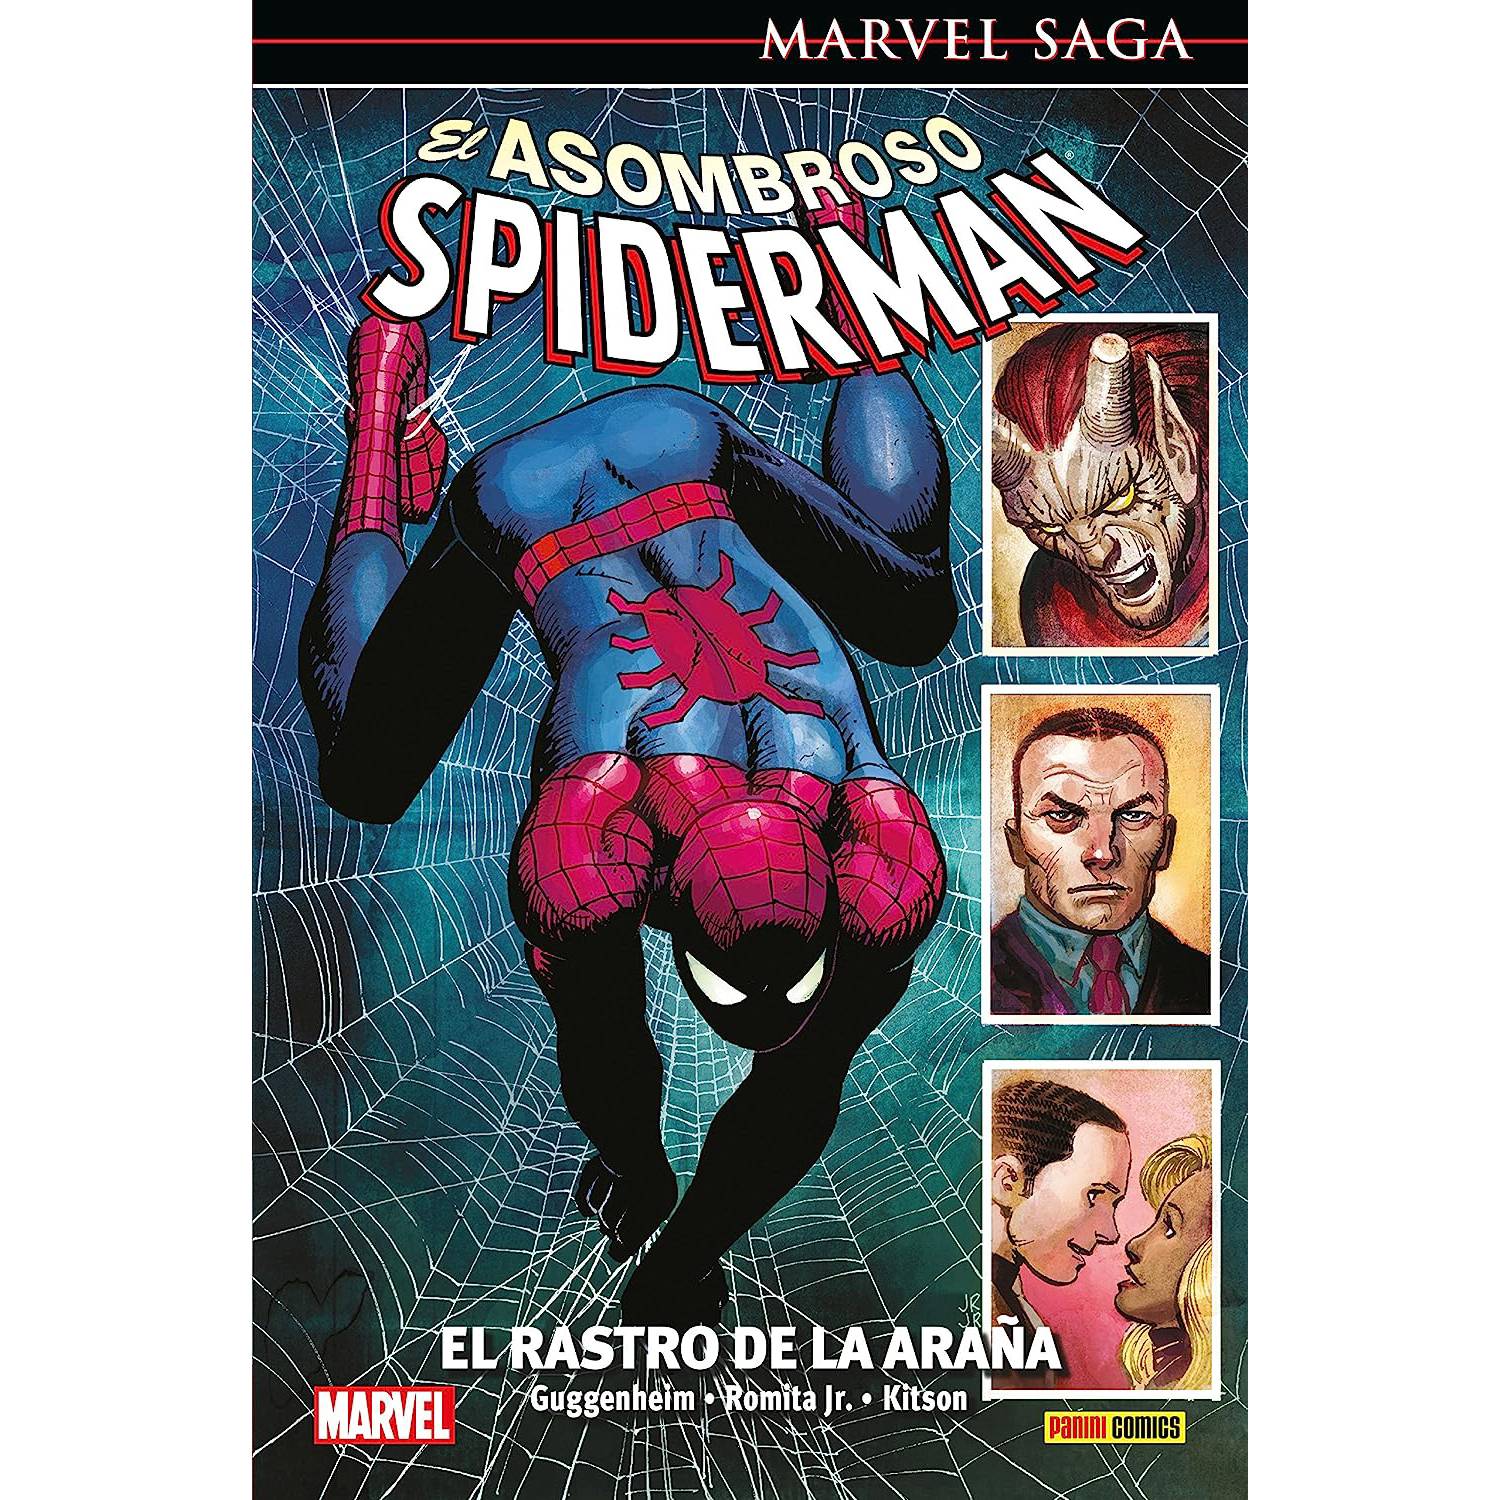 PANINI Marvel Saga El Asombroso Spiderman 20 El Rastro De La Araña |  